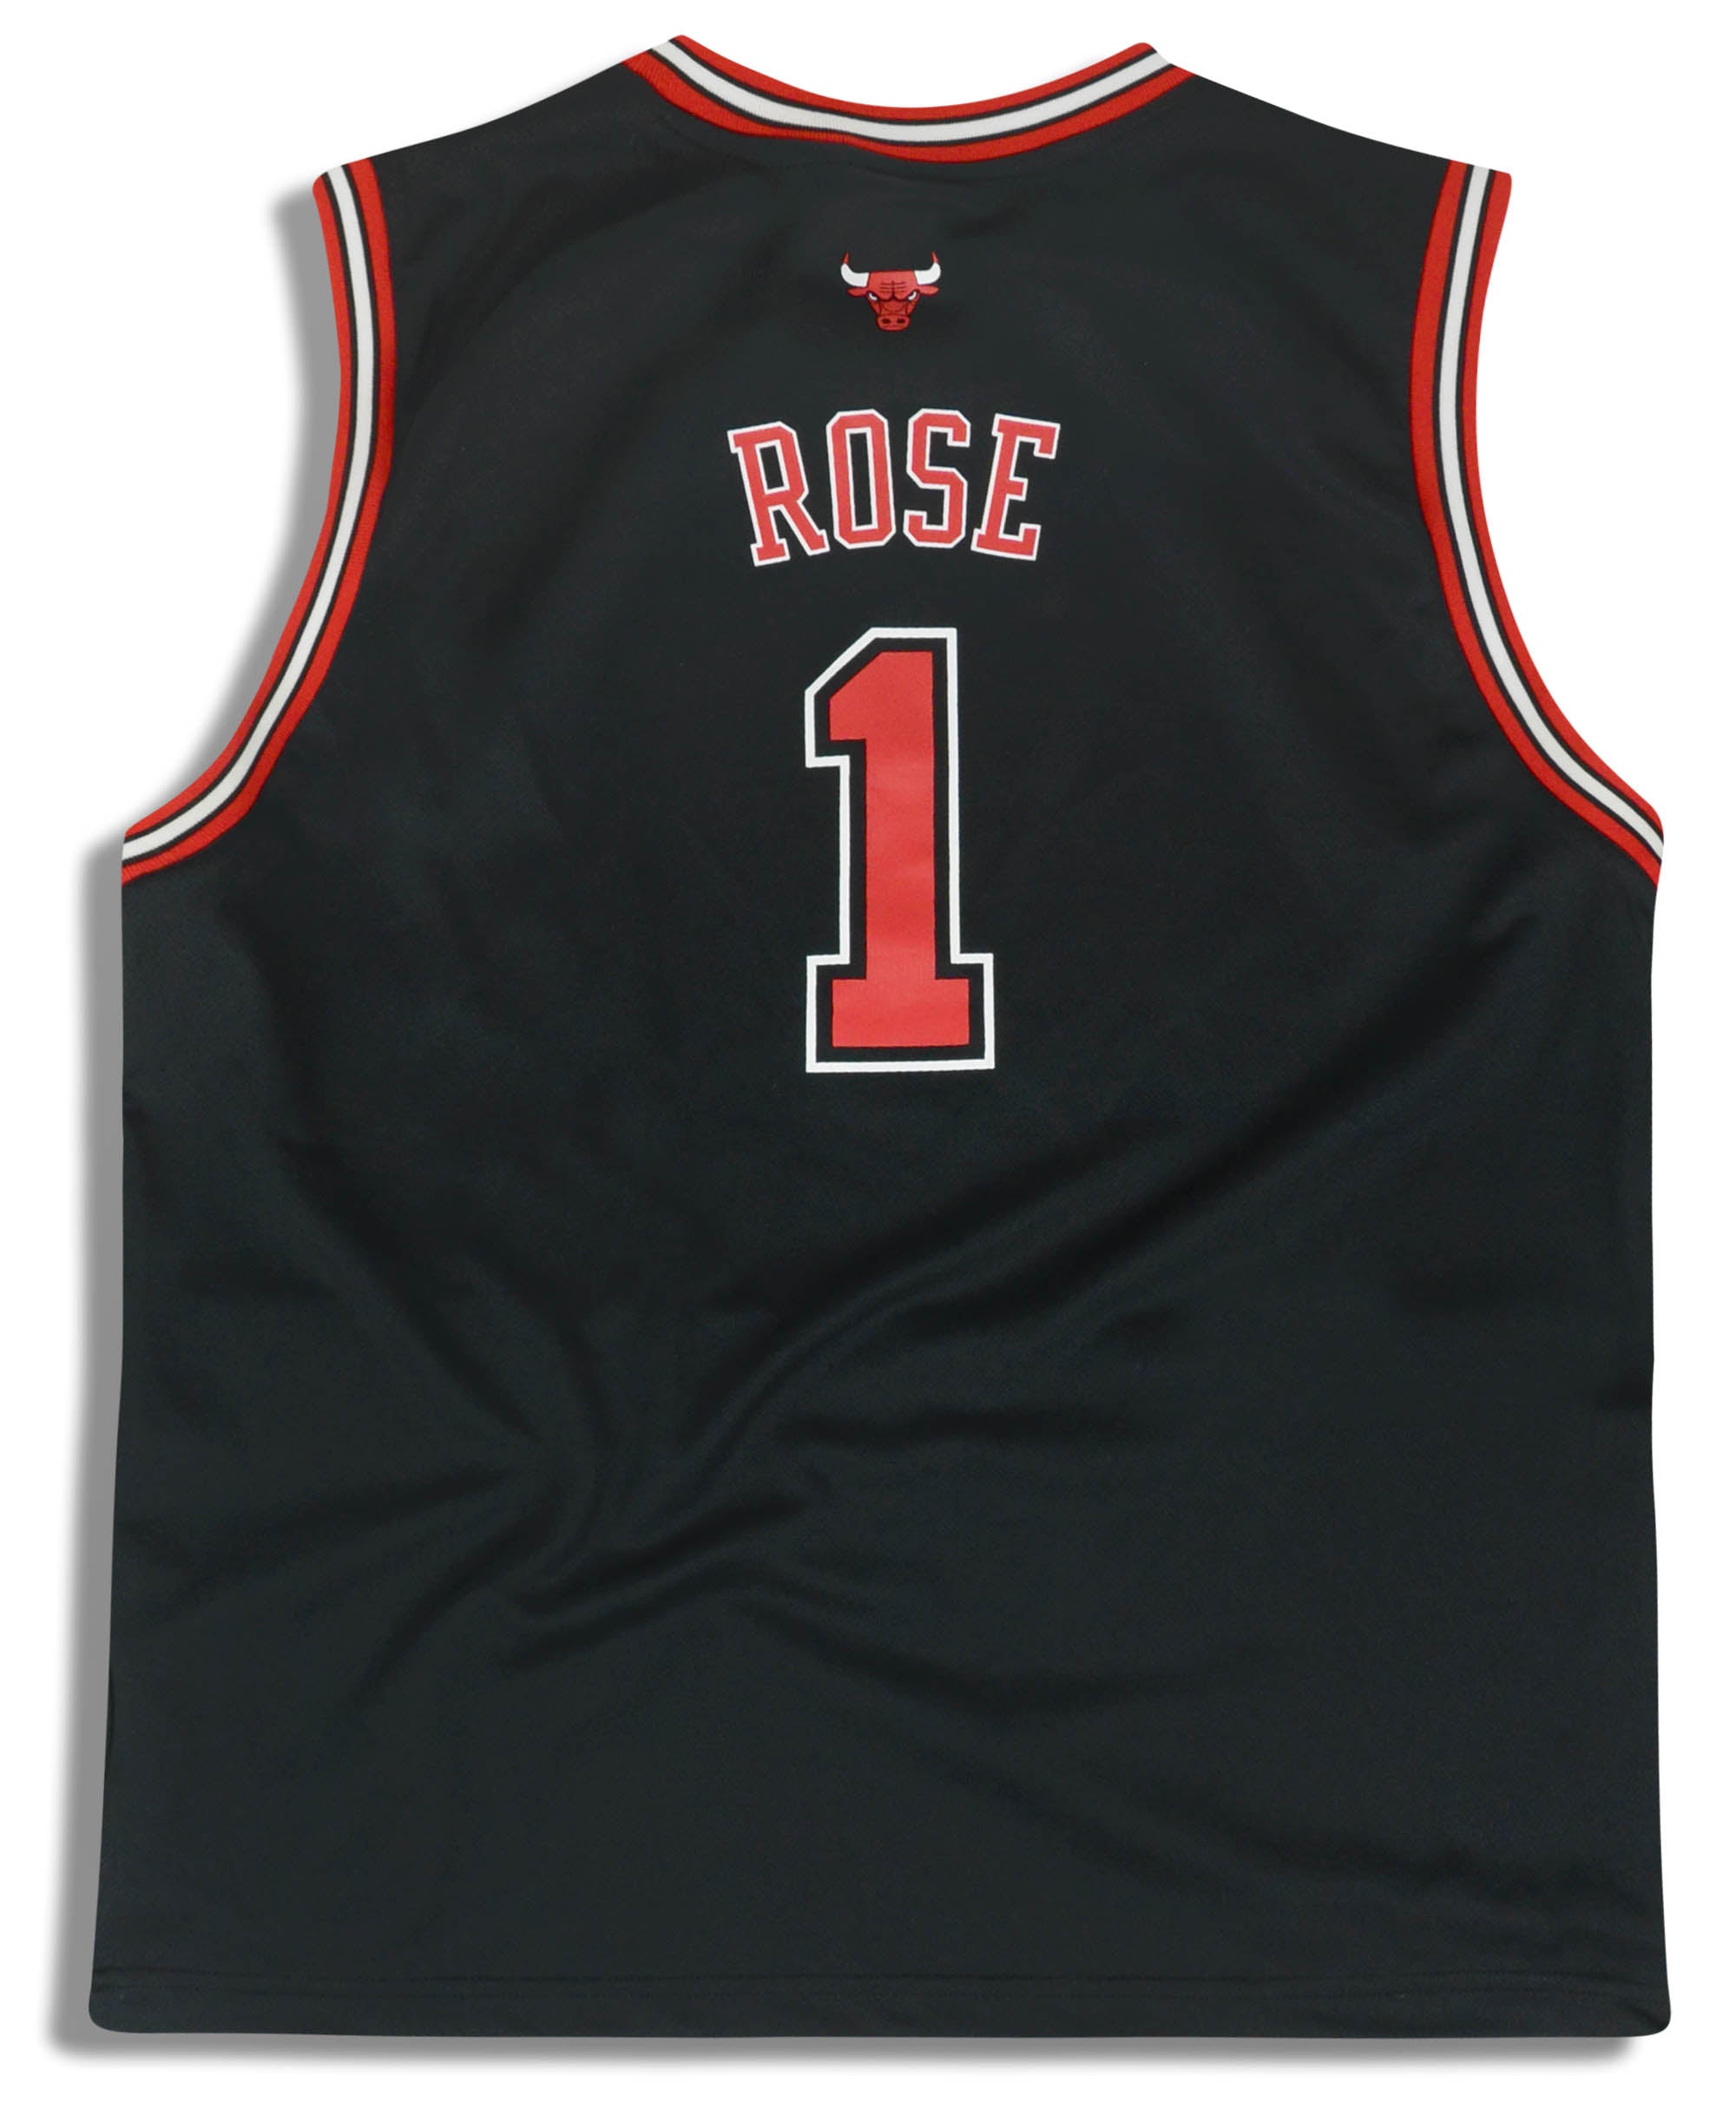 2010-14 CHICAGO BULLS ROSE #1 ADIDAS JERSEY (ALTERNATE) Y